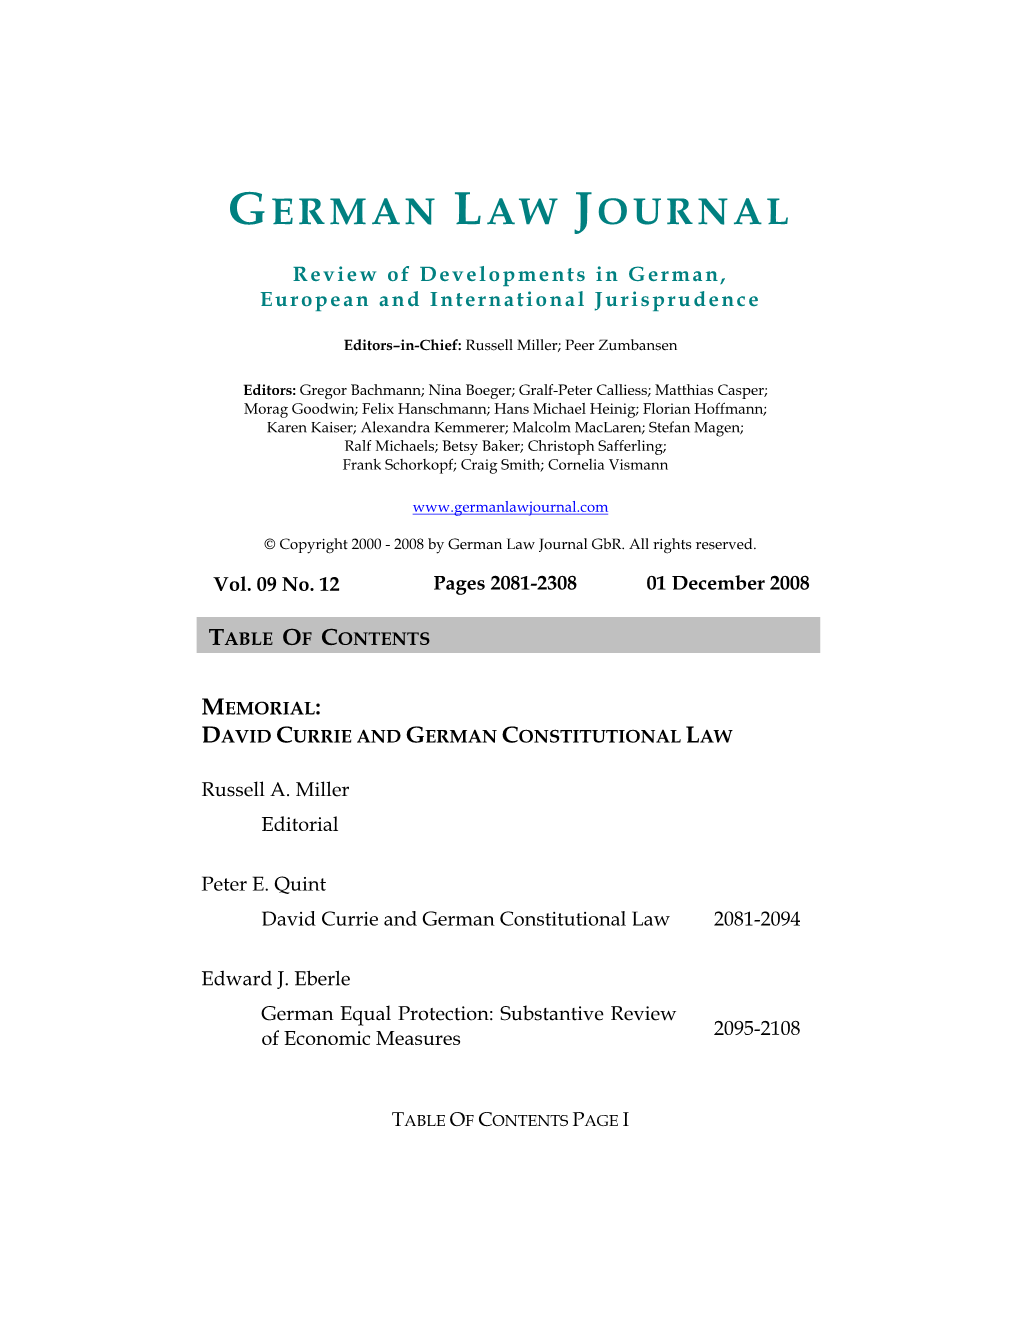 9 German Law Journal No. 12